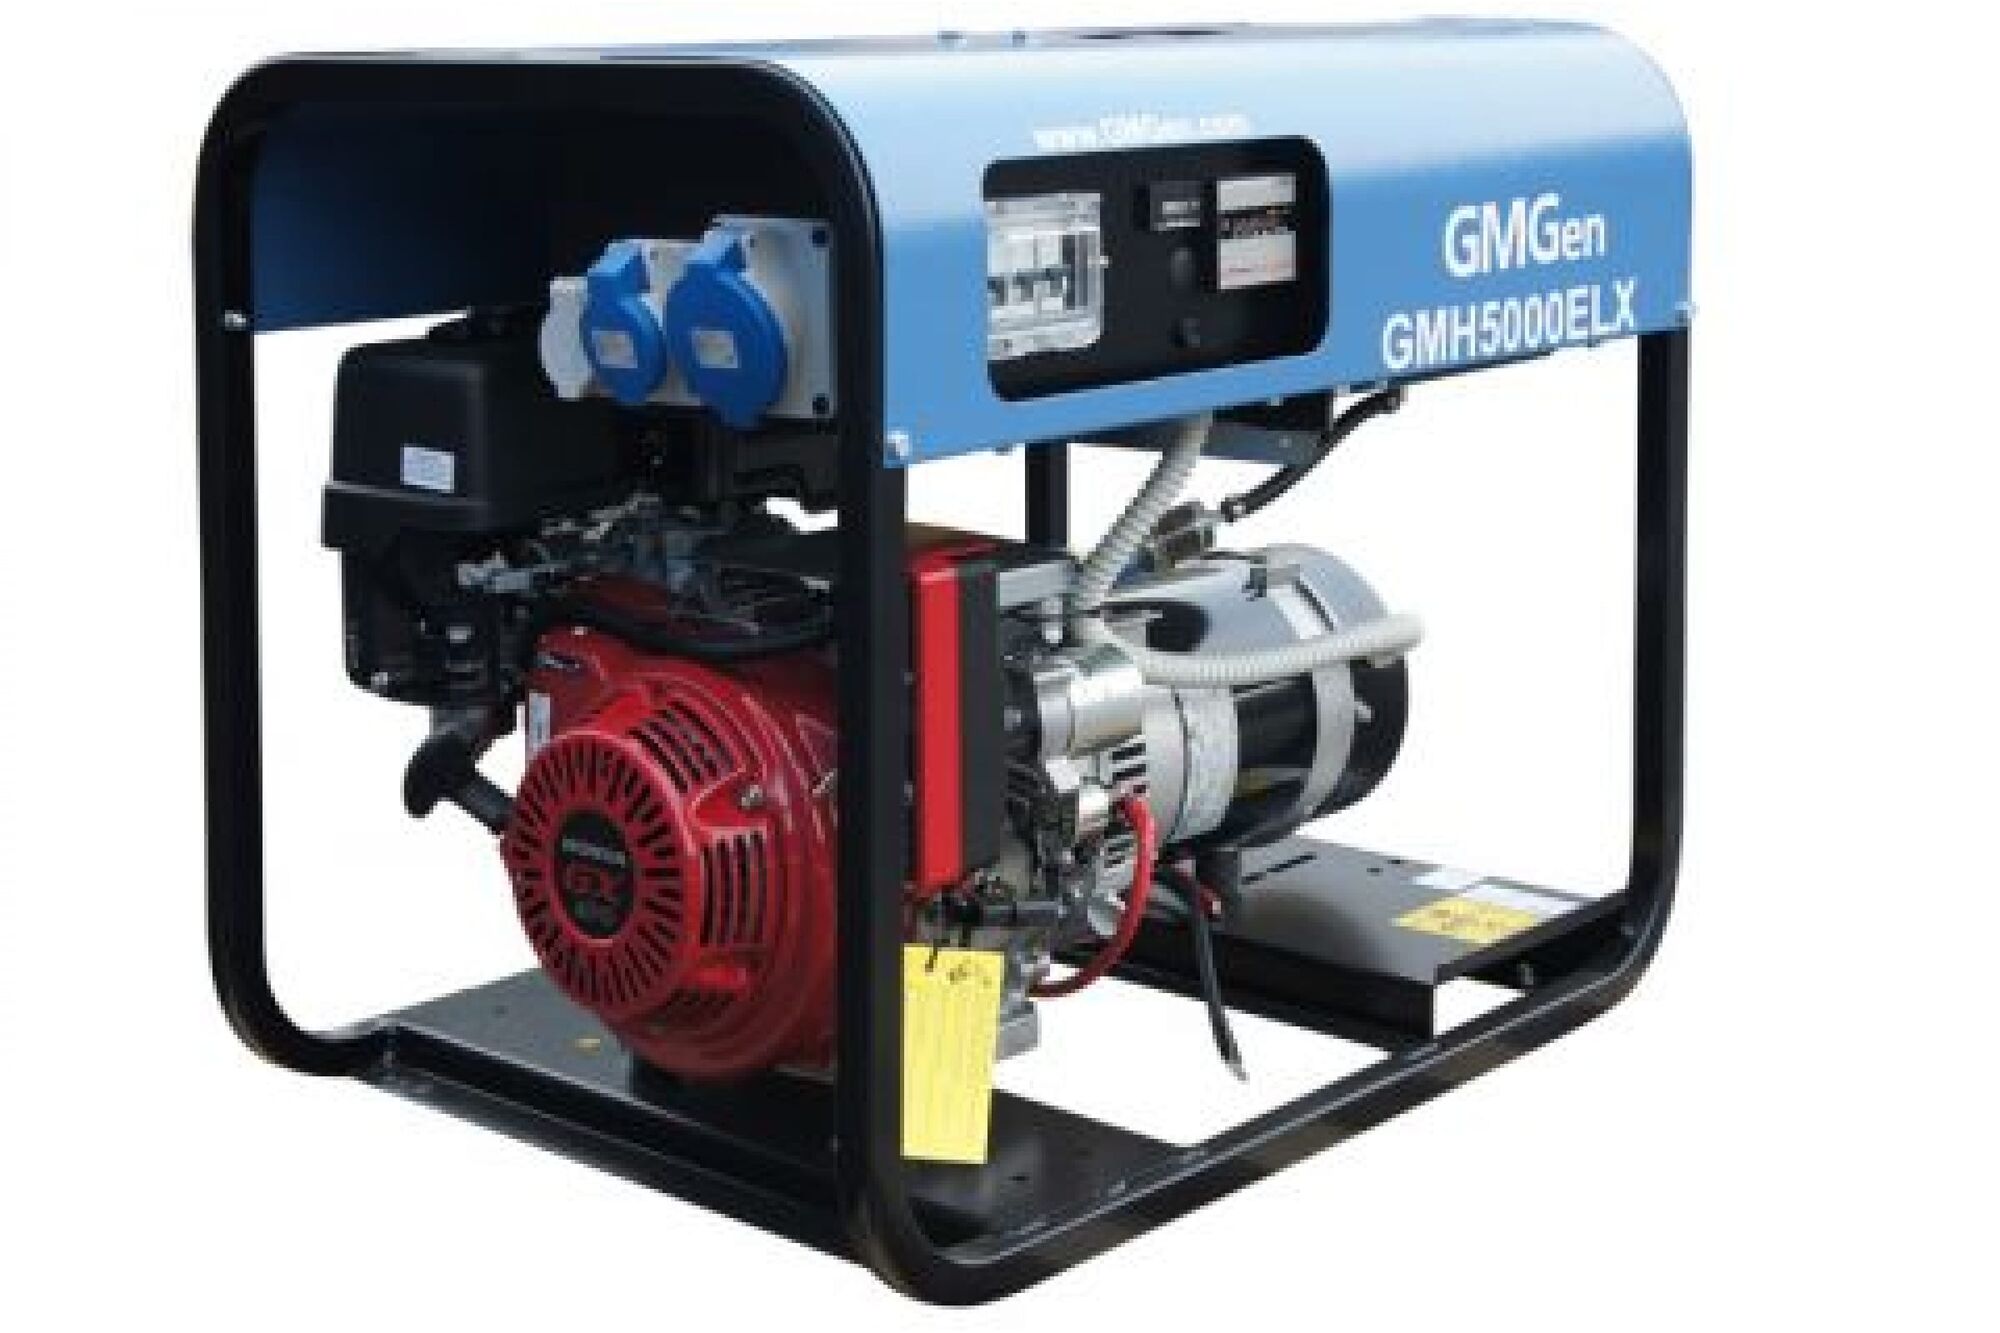 Бензогенератор GMGen Power Systems GMH5000ELX 3.3 кВт, 220 В 501839 1